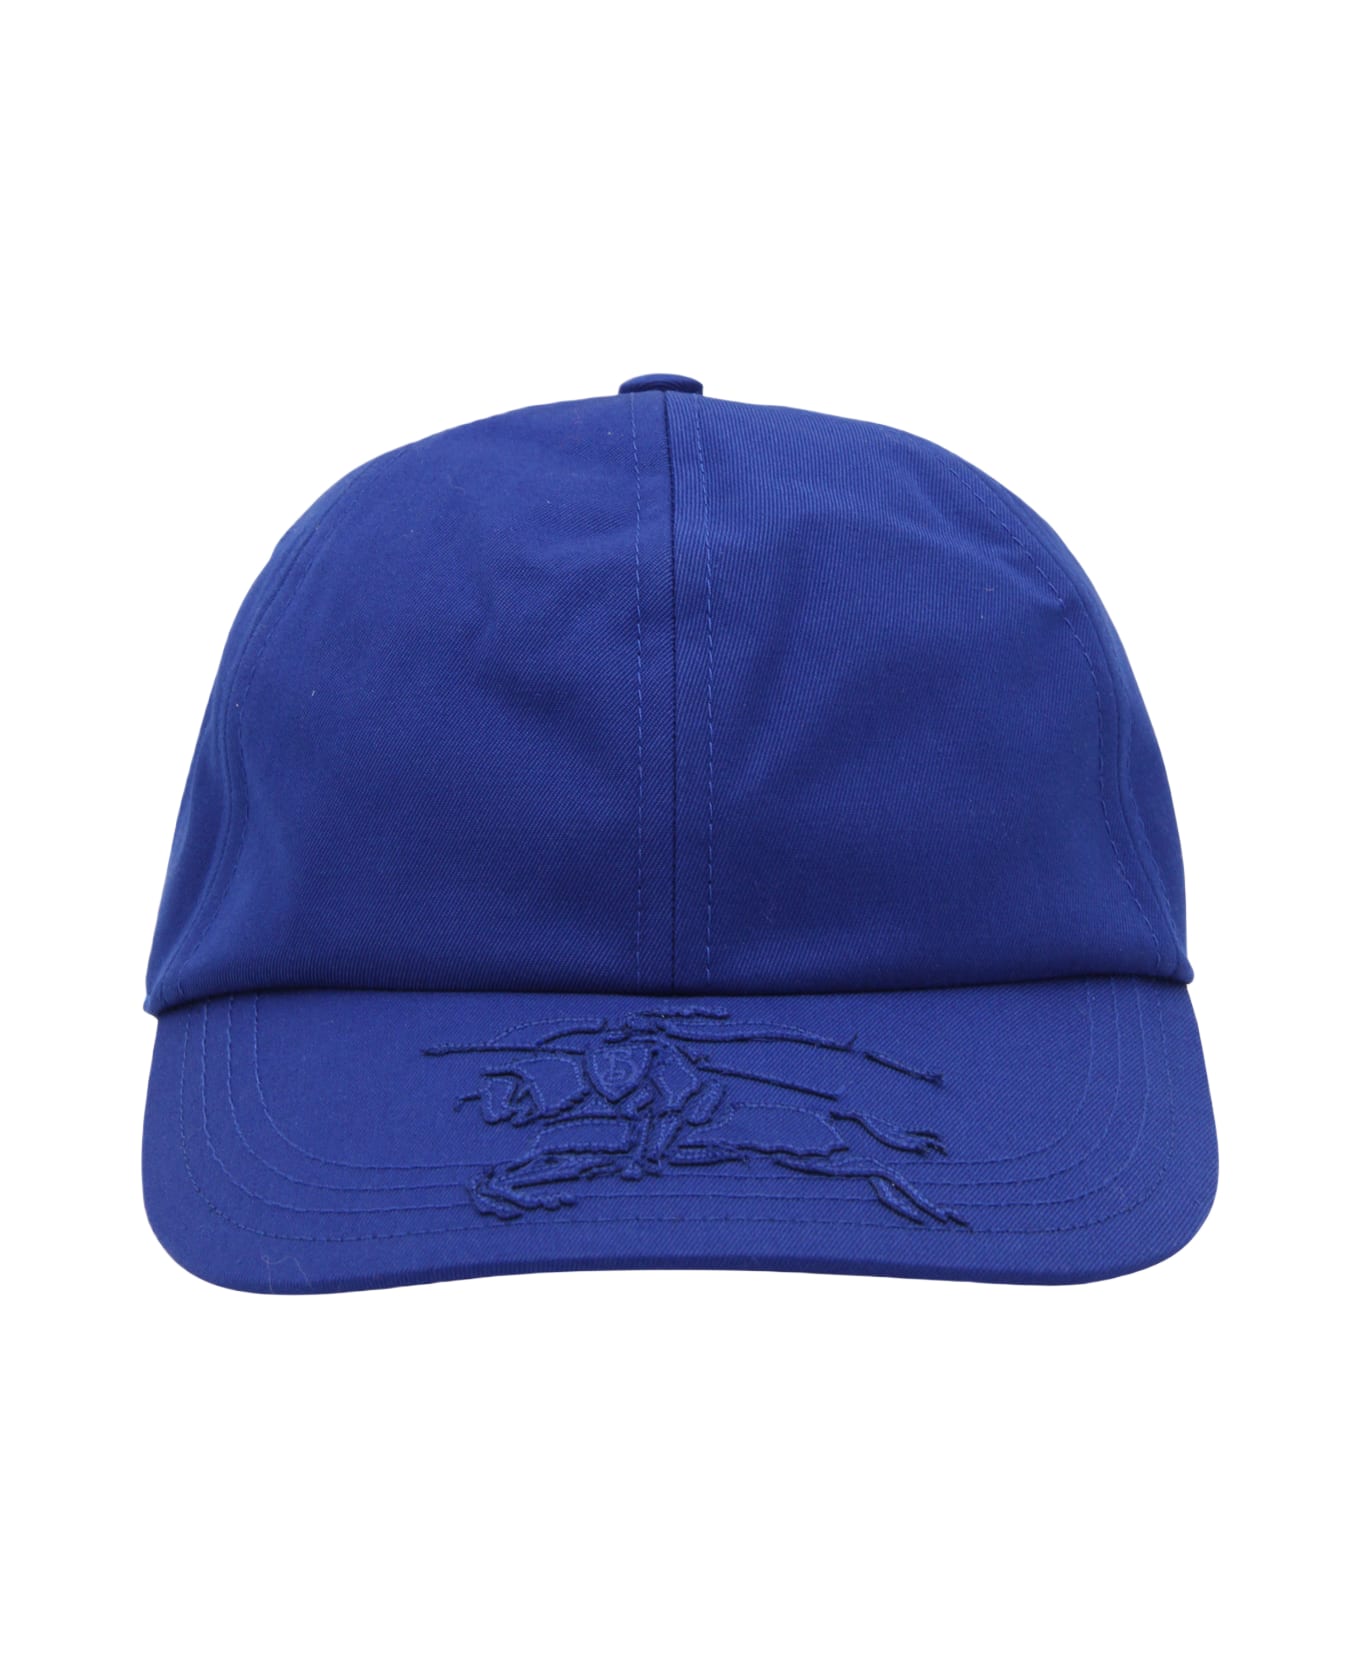 Burberry Blue Cotton Blend Baseball Cap - KNIGHT 帽子